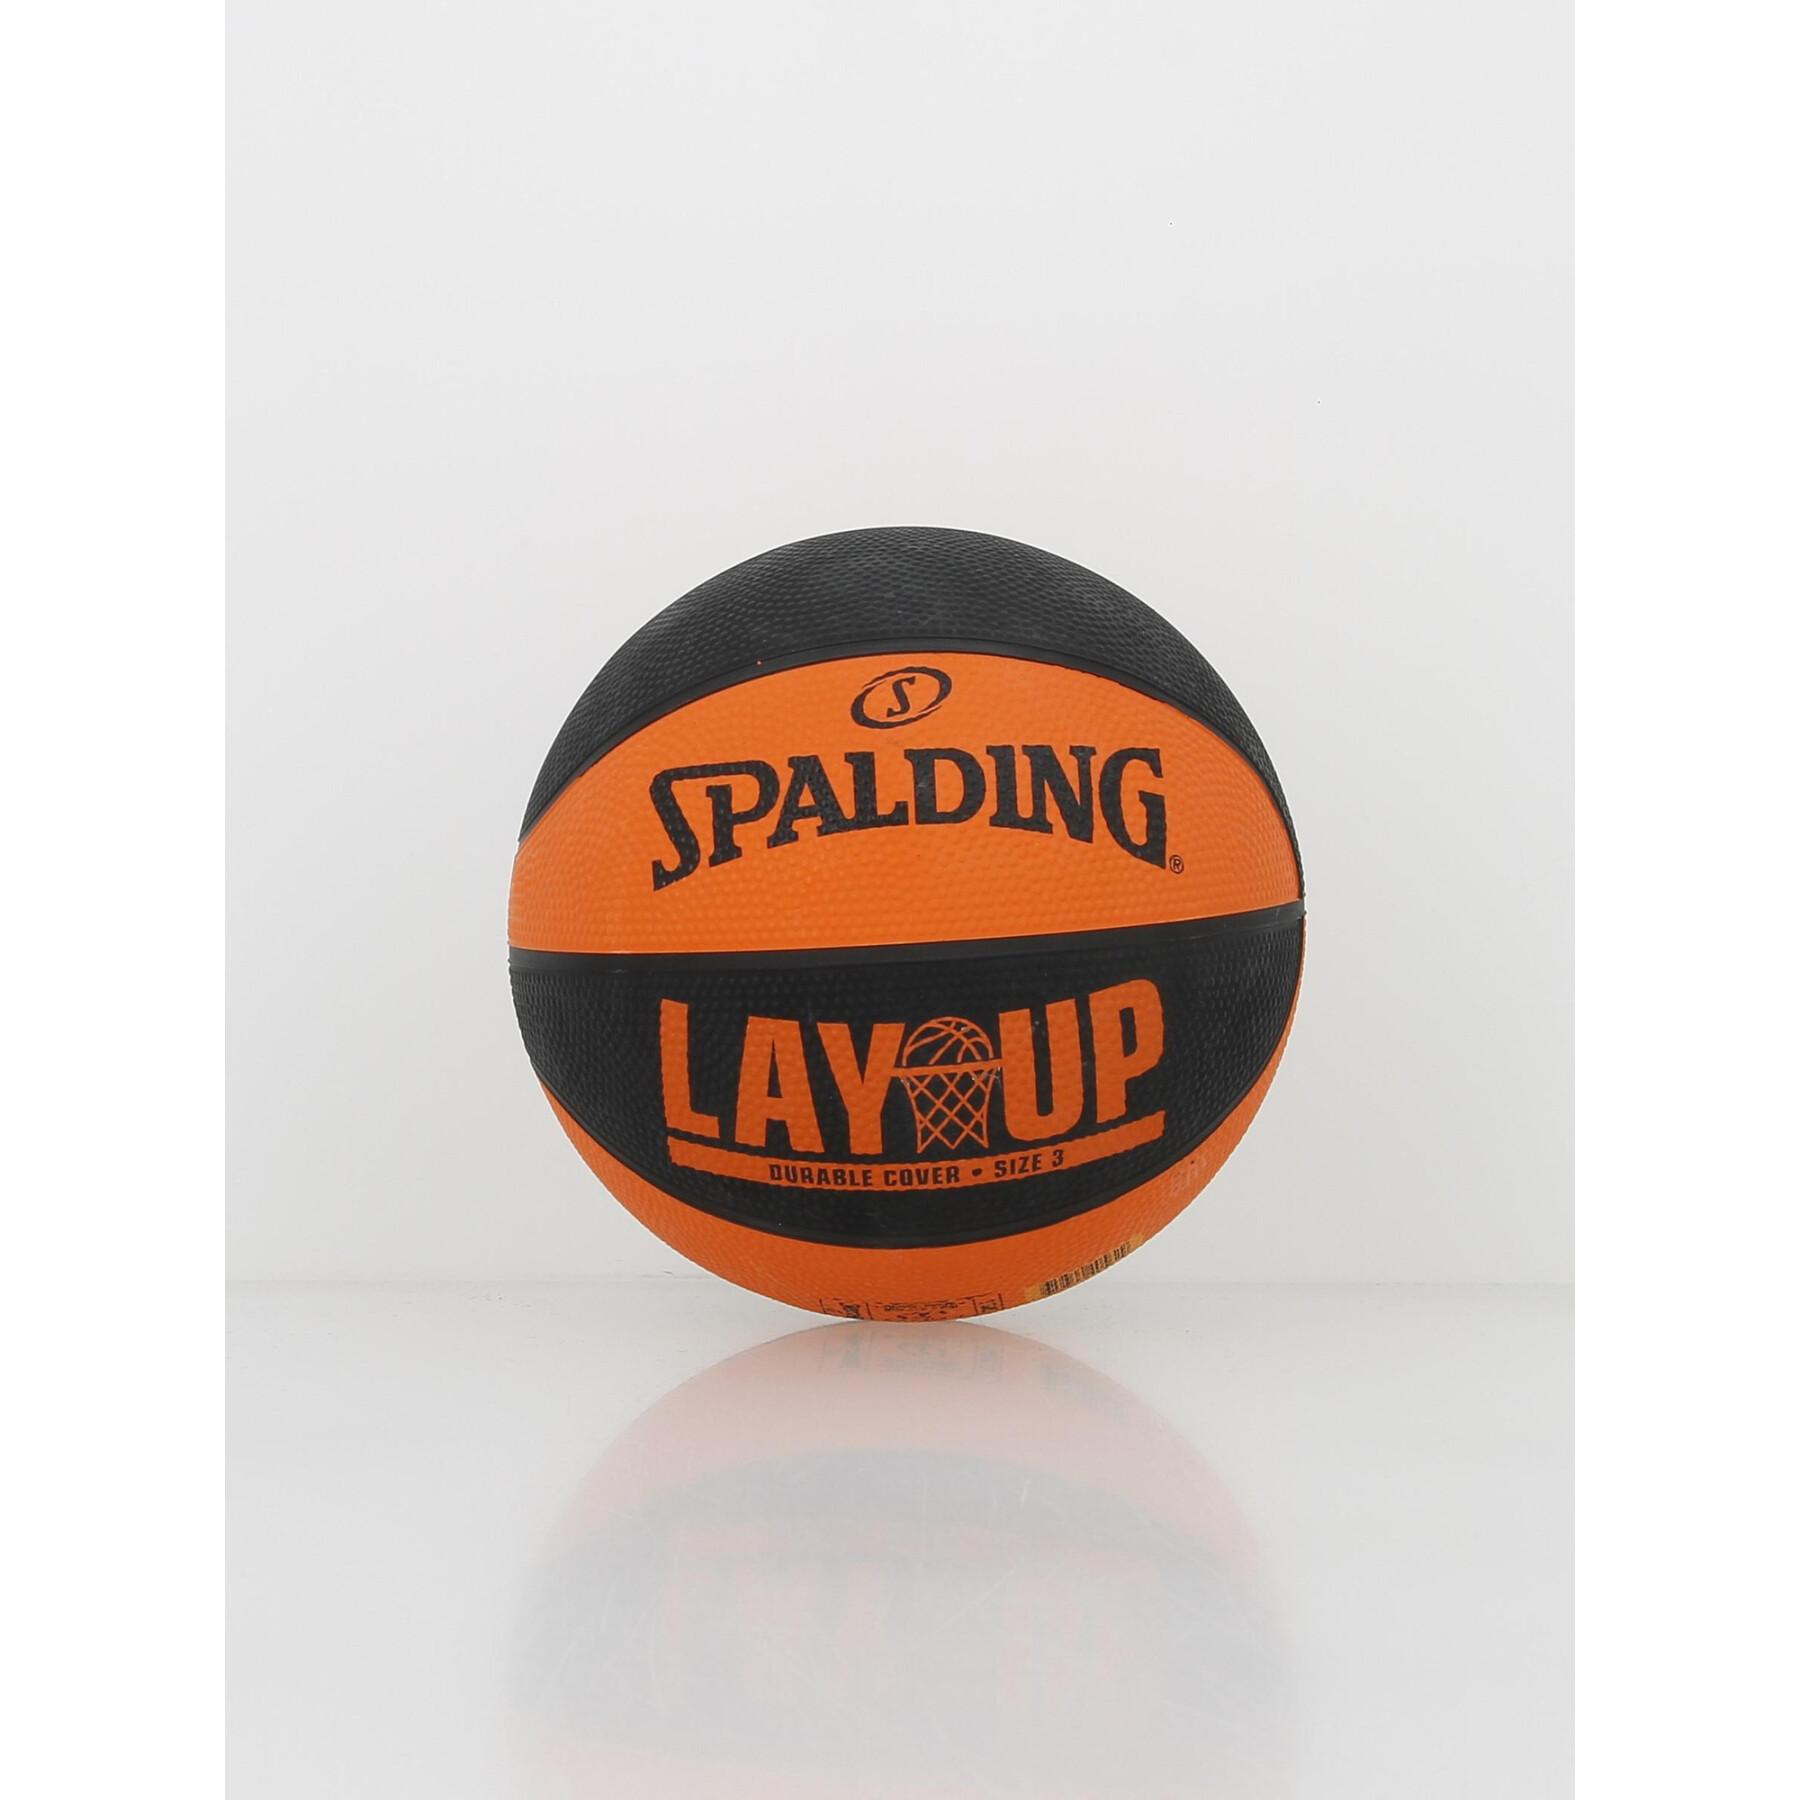 Balão Spalding Layup TF-50